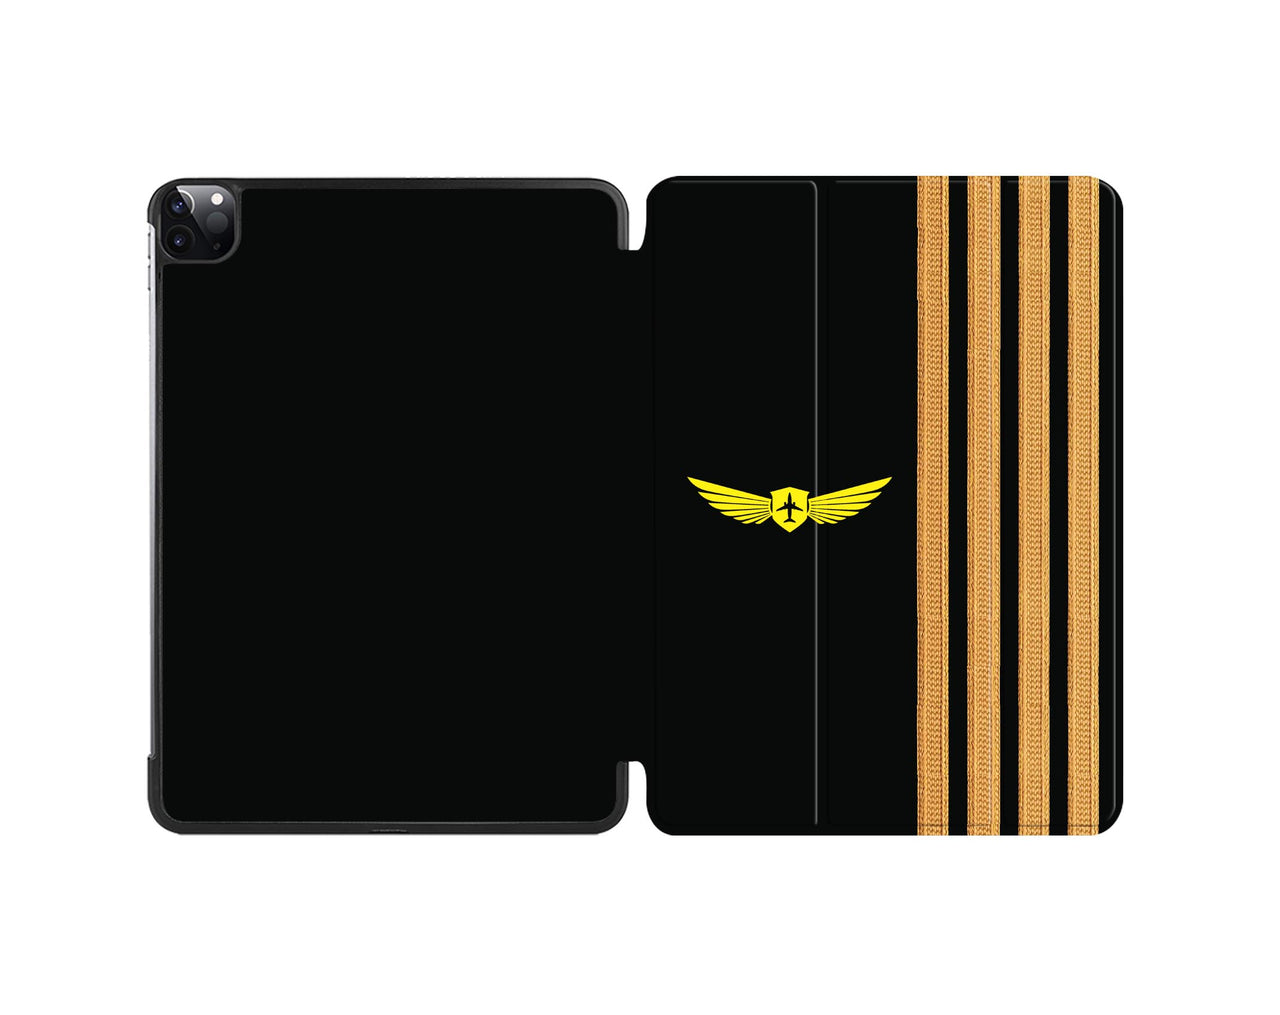 Customizable Special Golden Pilot Epaulettes (4,3,2 Lines) iPad Cases